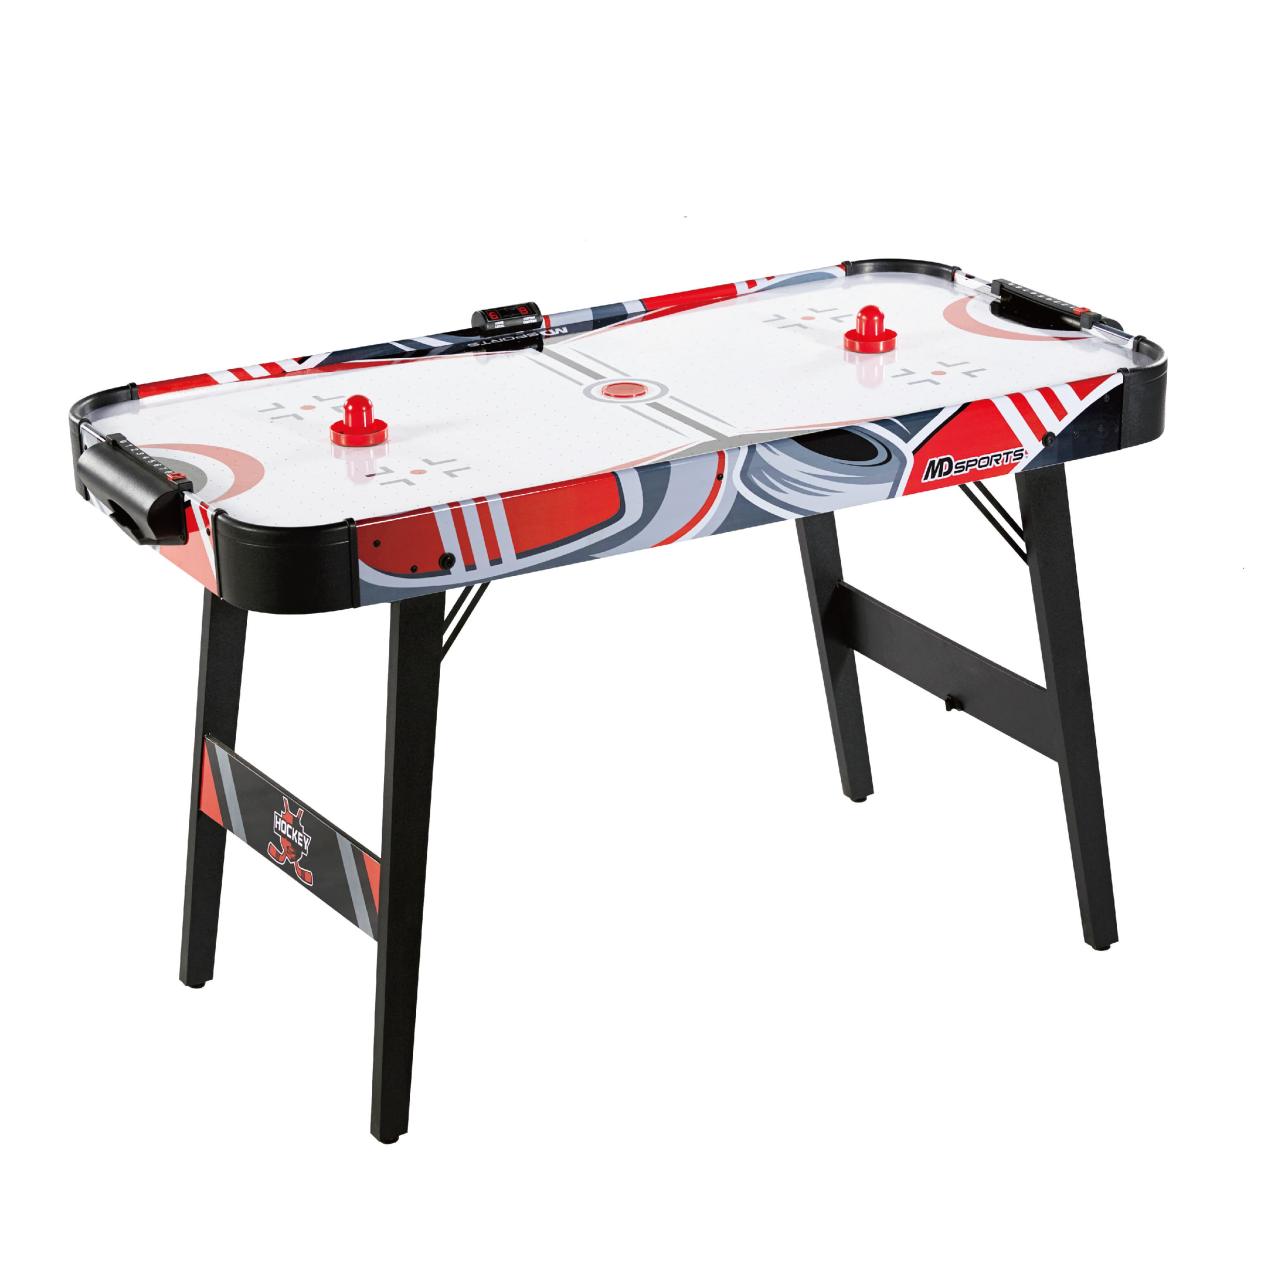 Md sports air hockey table